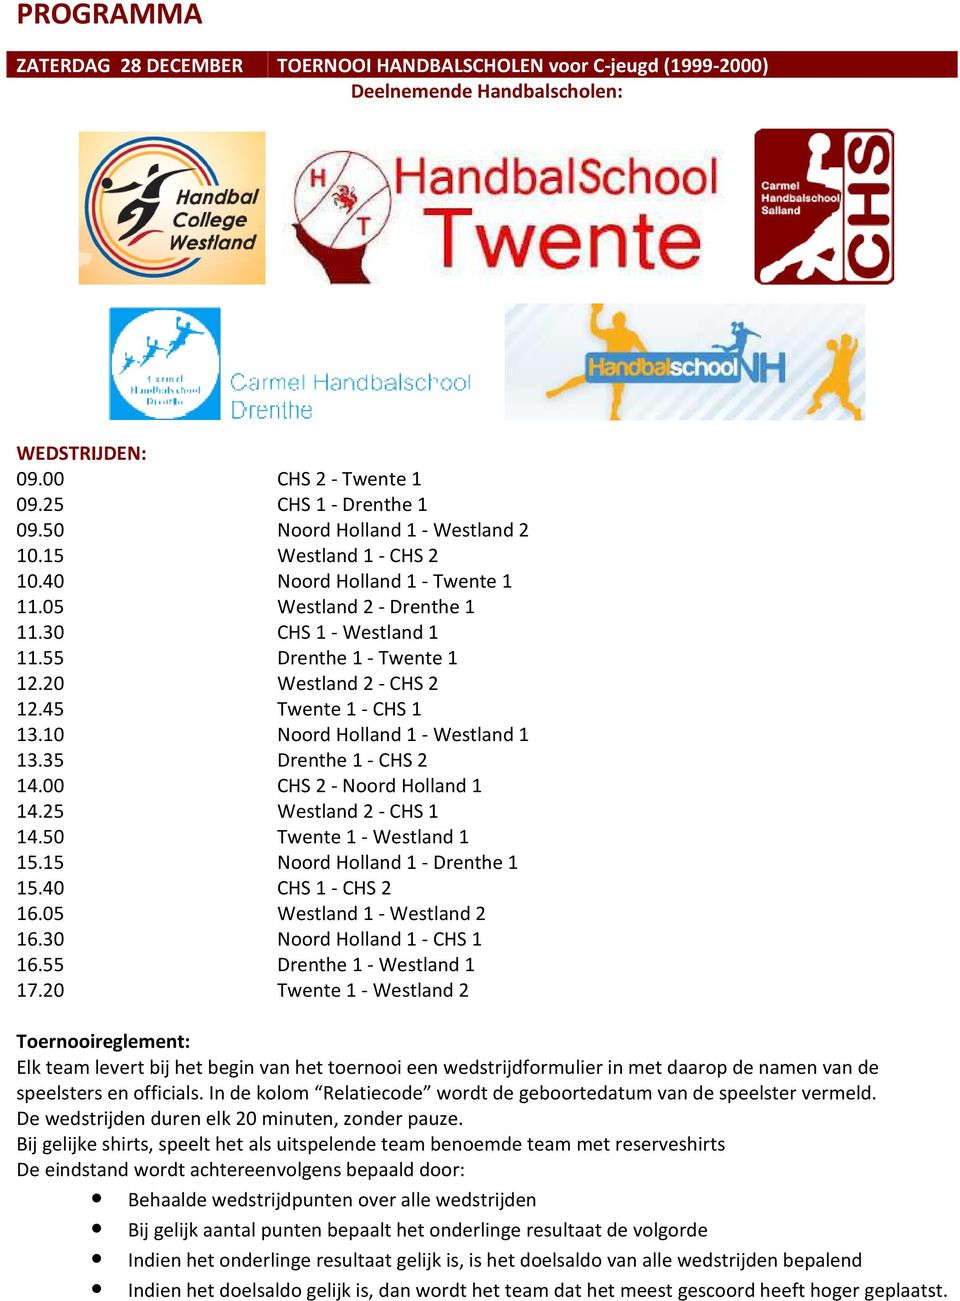 45 Twente 1 - CHS 1 13.10 Noord Holland 1 - Westland 1 13.35 Drenthe 1 - CHS 2 14.00 CHS 2 - Noord Holland 1 14.25 Westland 2 - CHS 1 14.50 Twente 1 - Westland 1 15.15 Noord Holland 1 - Drenthe 1 15.